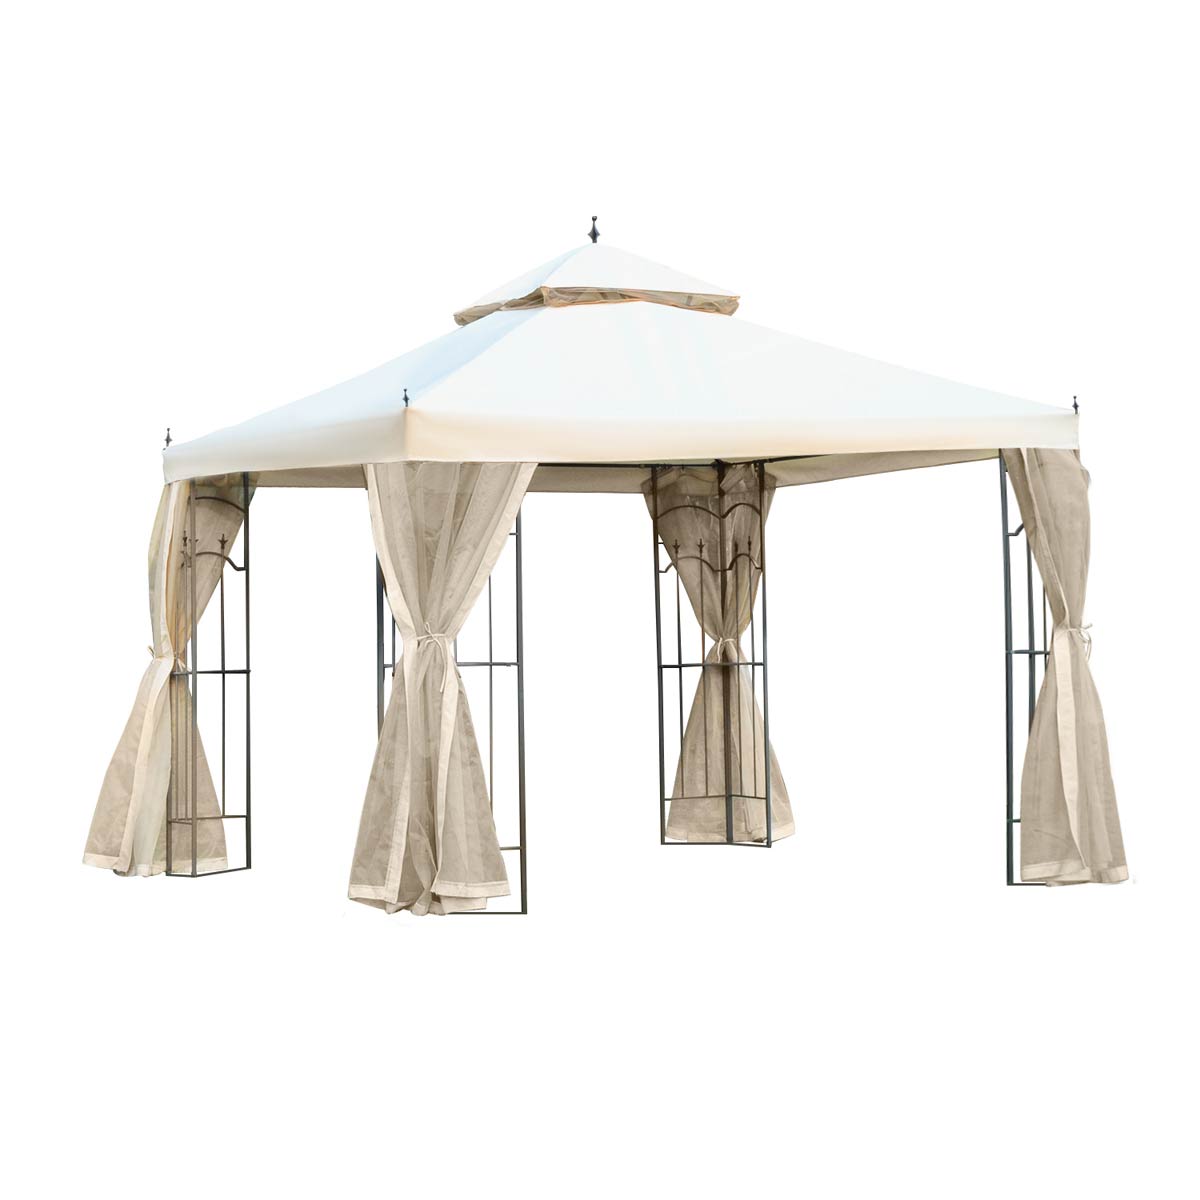 Outsunny 3 X 3M Garden Gazebo Double Top Gazebo Canopy With Curtains - Cream & White